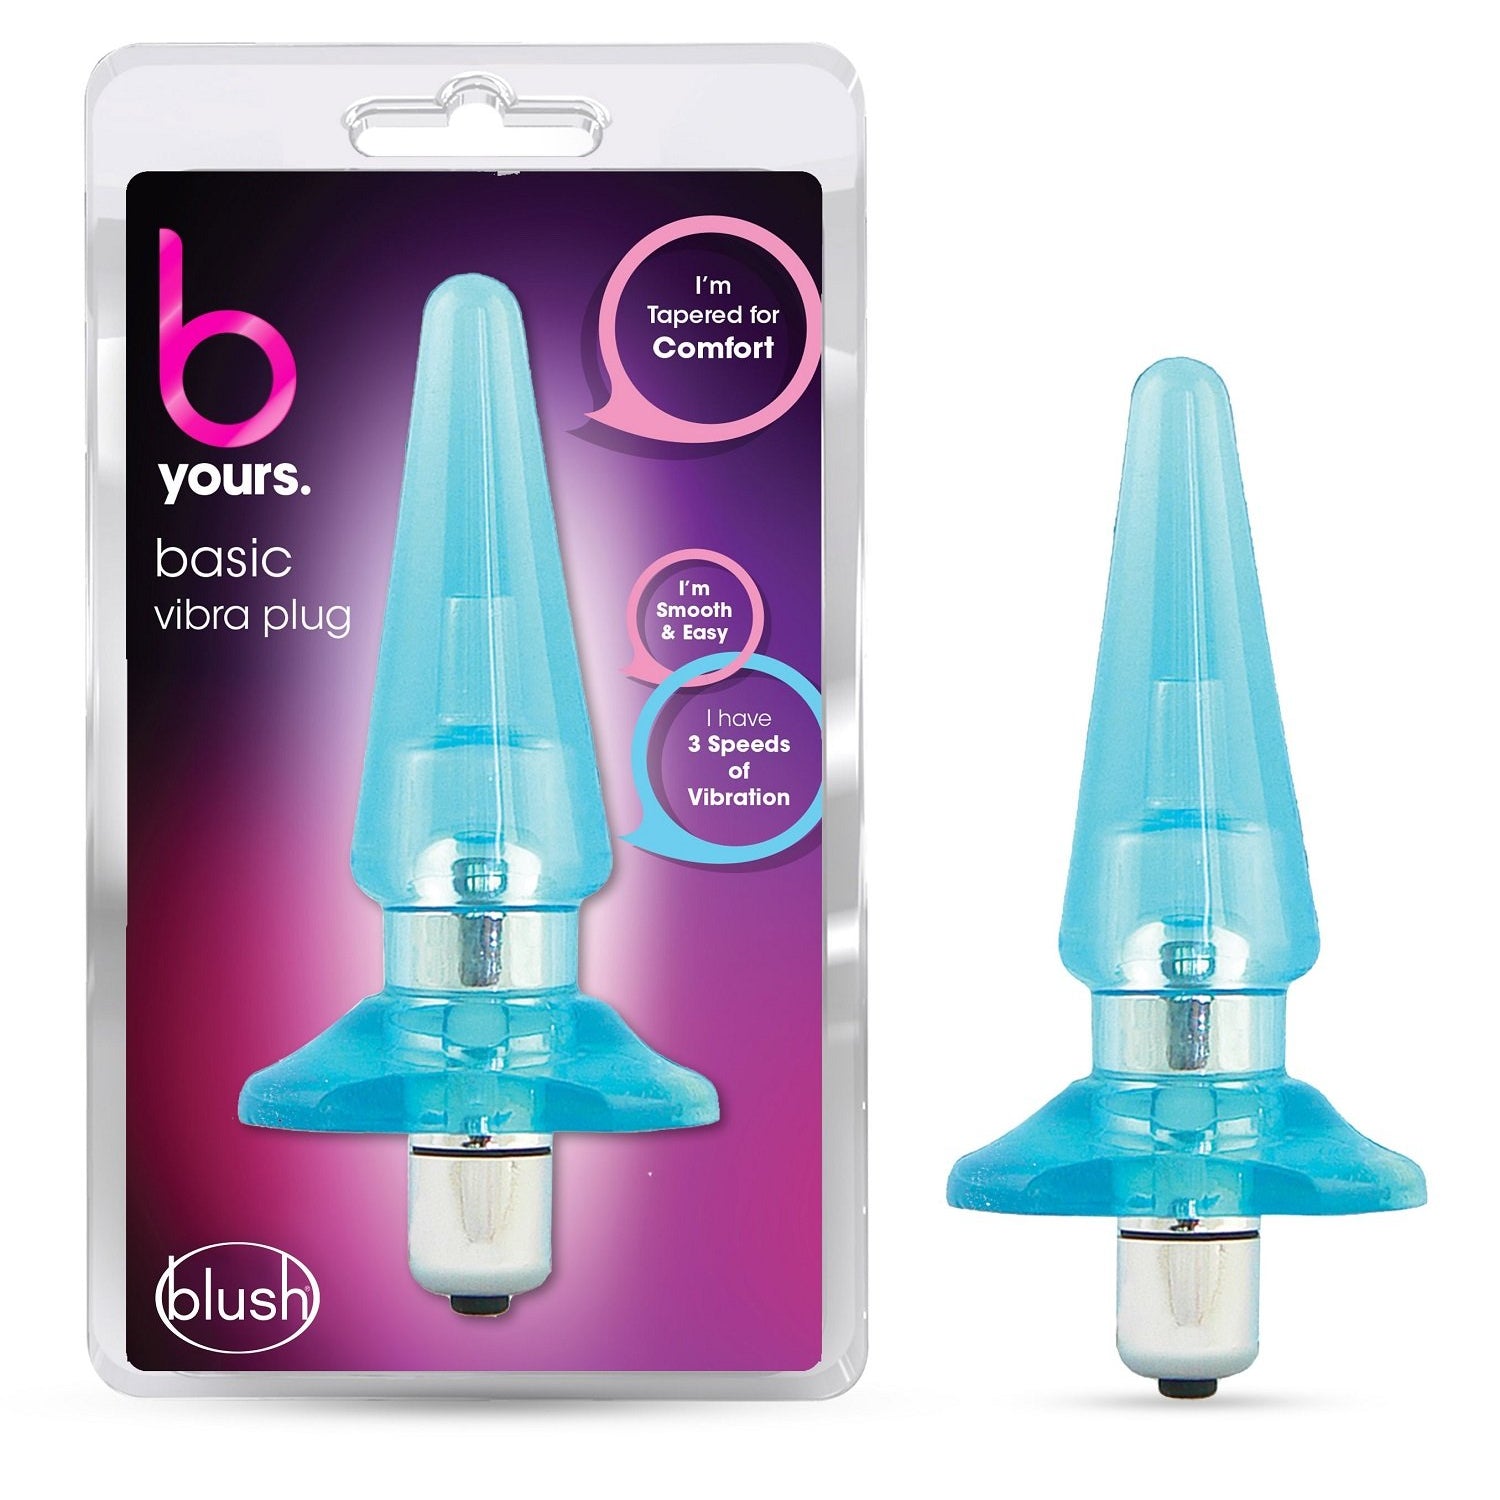 B Yours Basic Vibra Plug - Blue